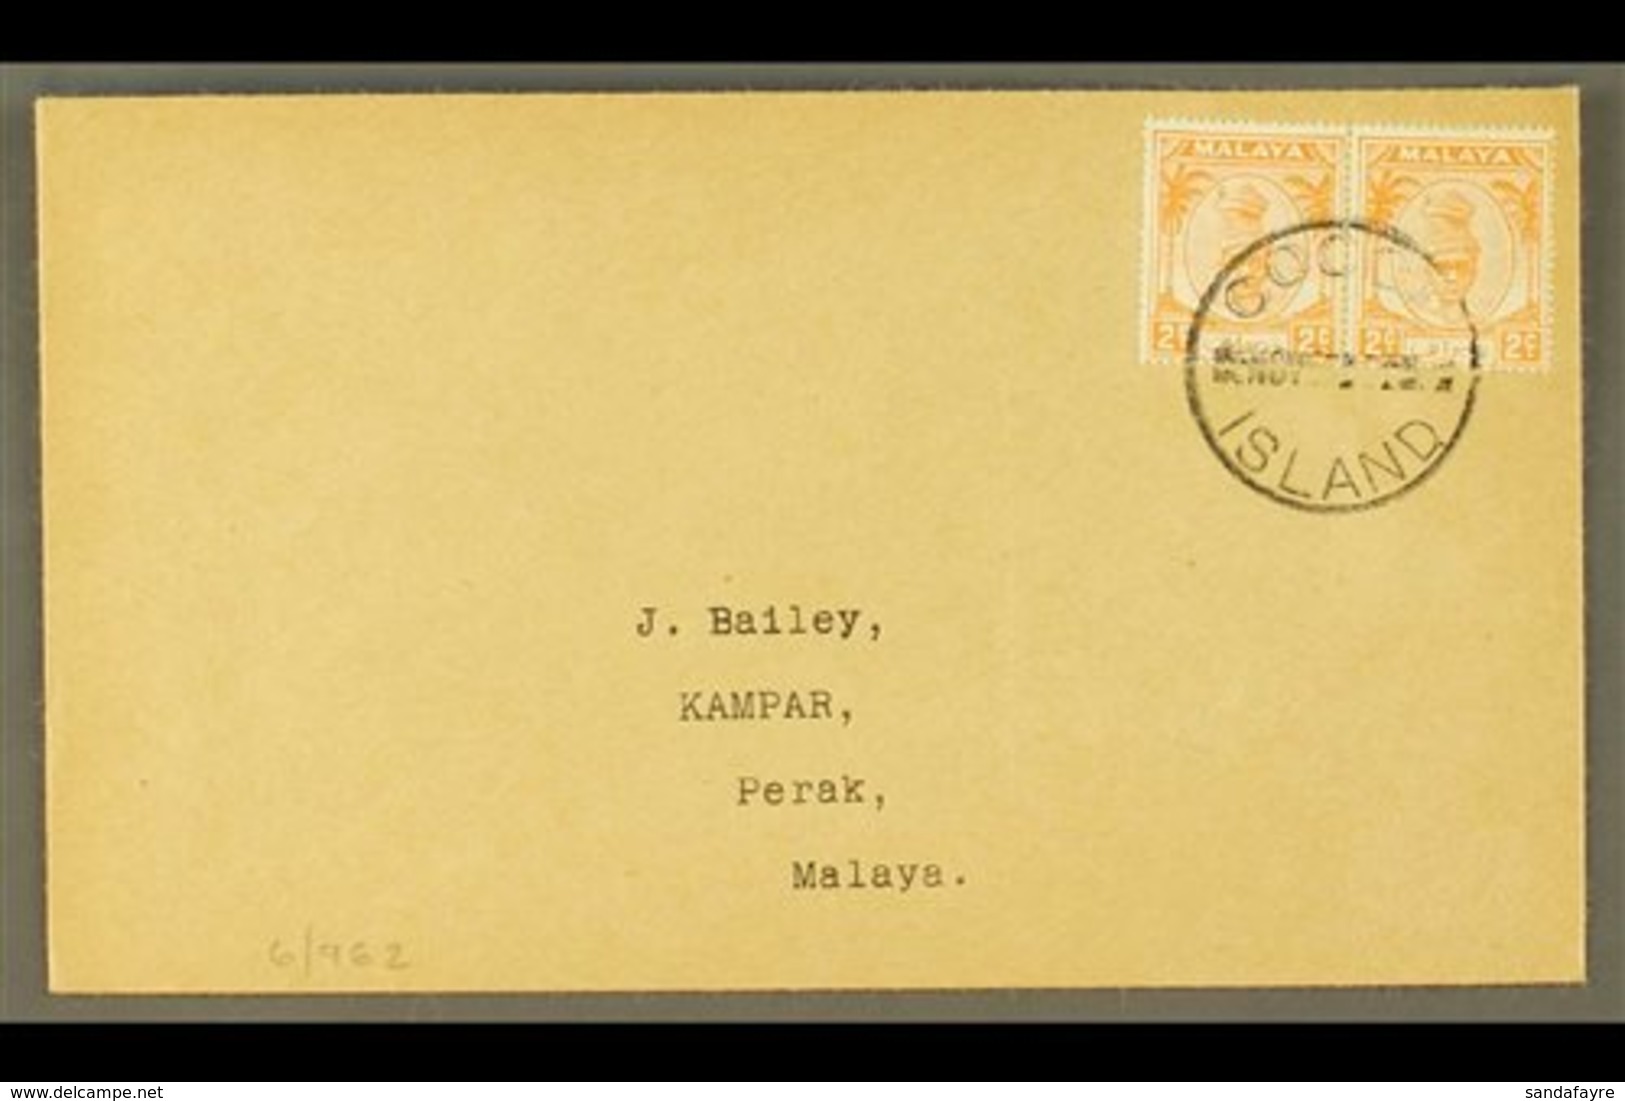 1950  (Nov) neat Envelope To Perak Bearing Perak 2c Orange (SG 129) Pair Tied By COCOS ISLAND Cds. For More Images, Plea - Kokosinseln (Keeling Islands)